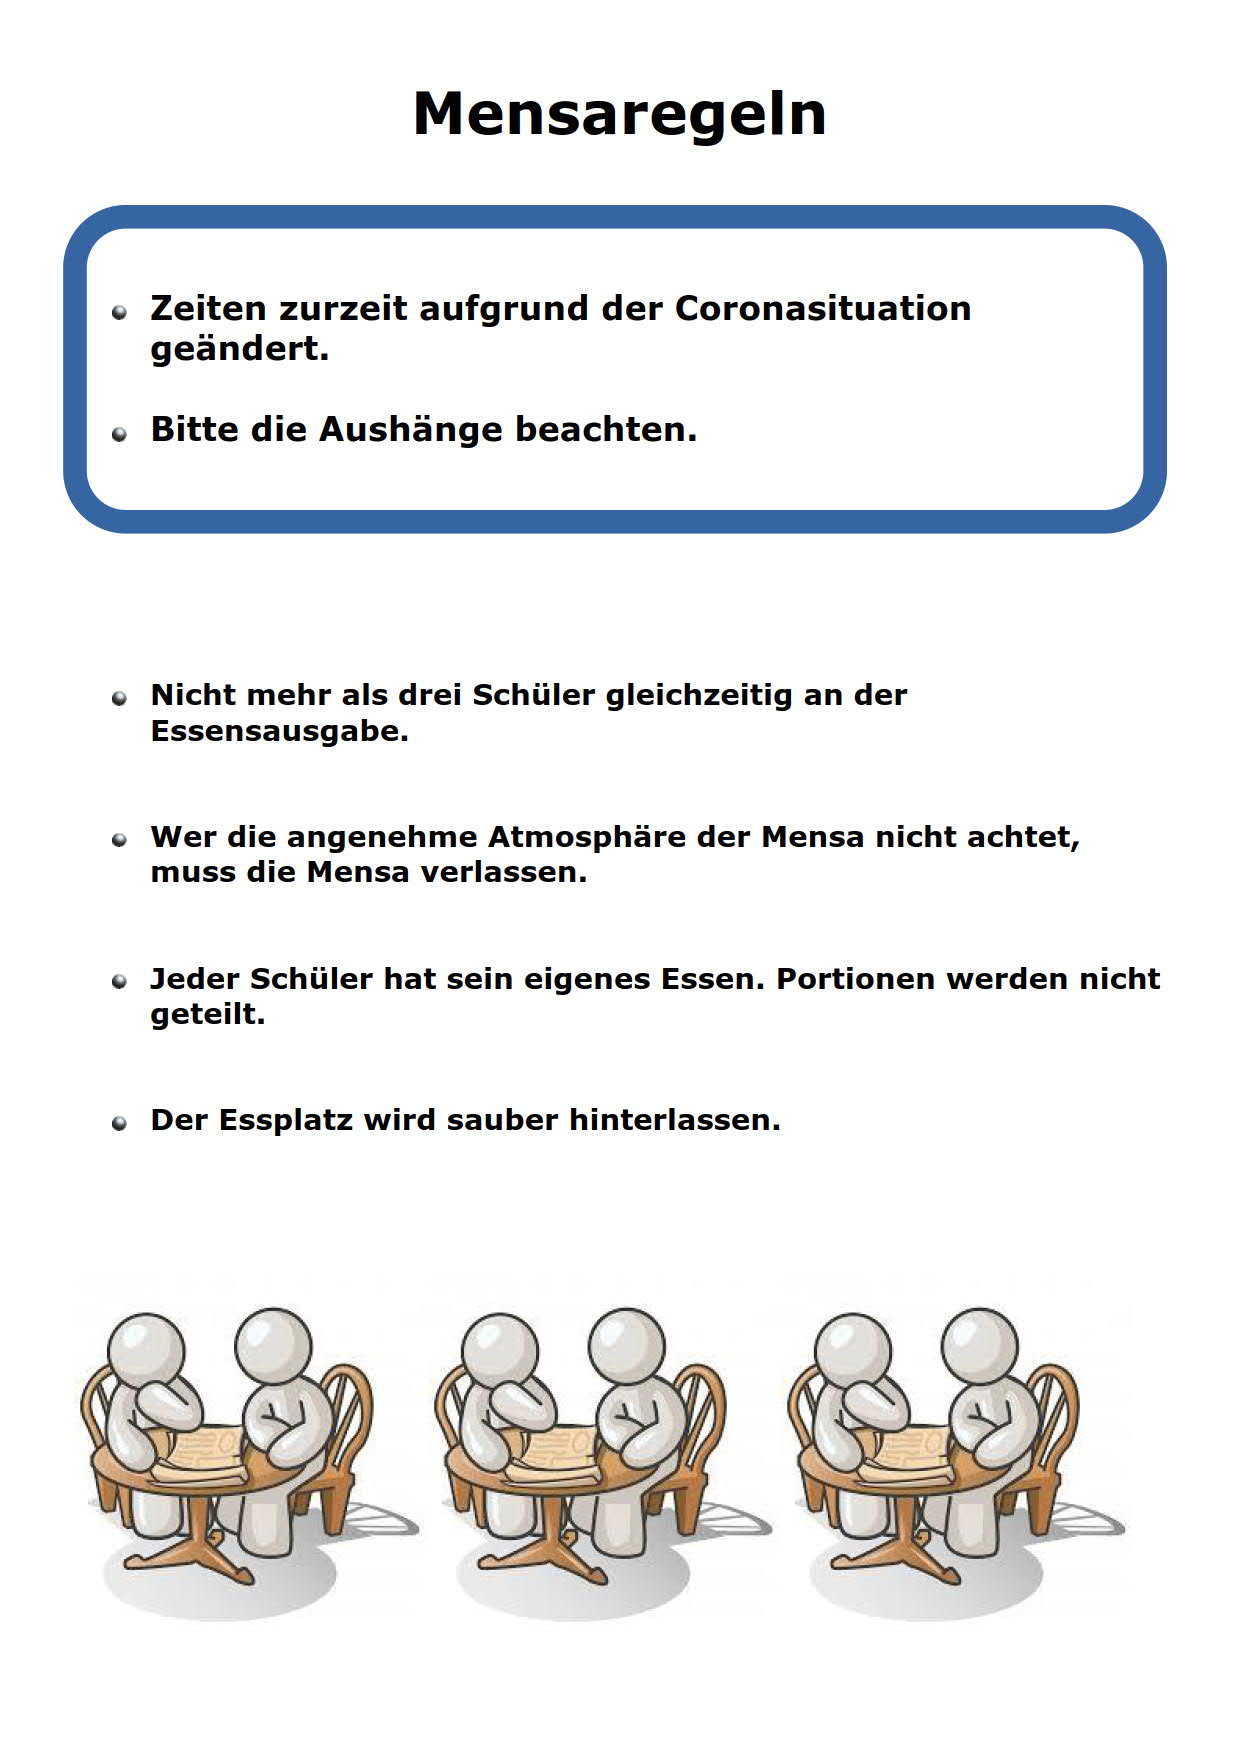 Mensaregeln - Corona - Trude-Herr-Gesamtschule Köln-Mülheim - THG